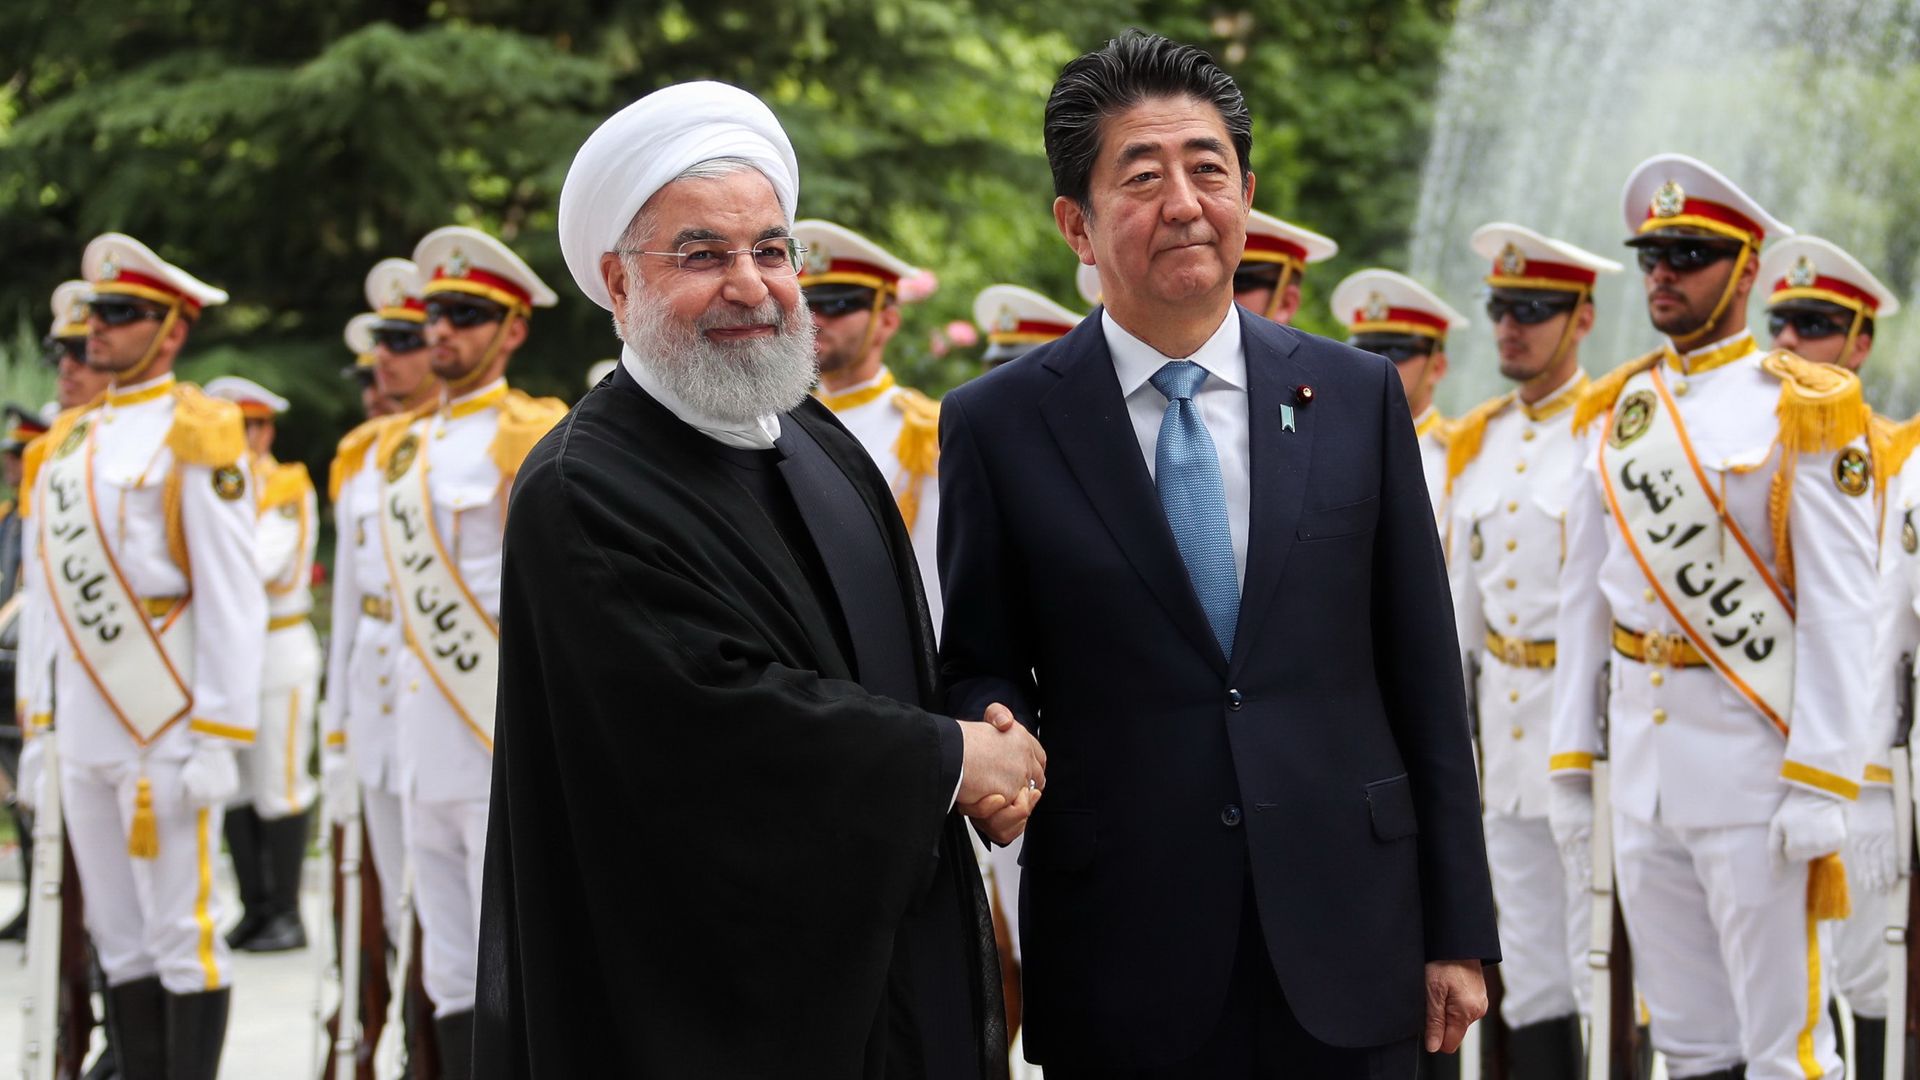 Shinzo Abe and Hassan Rouhani shaking hands